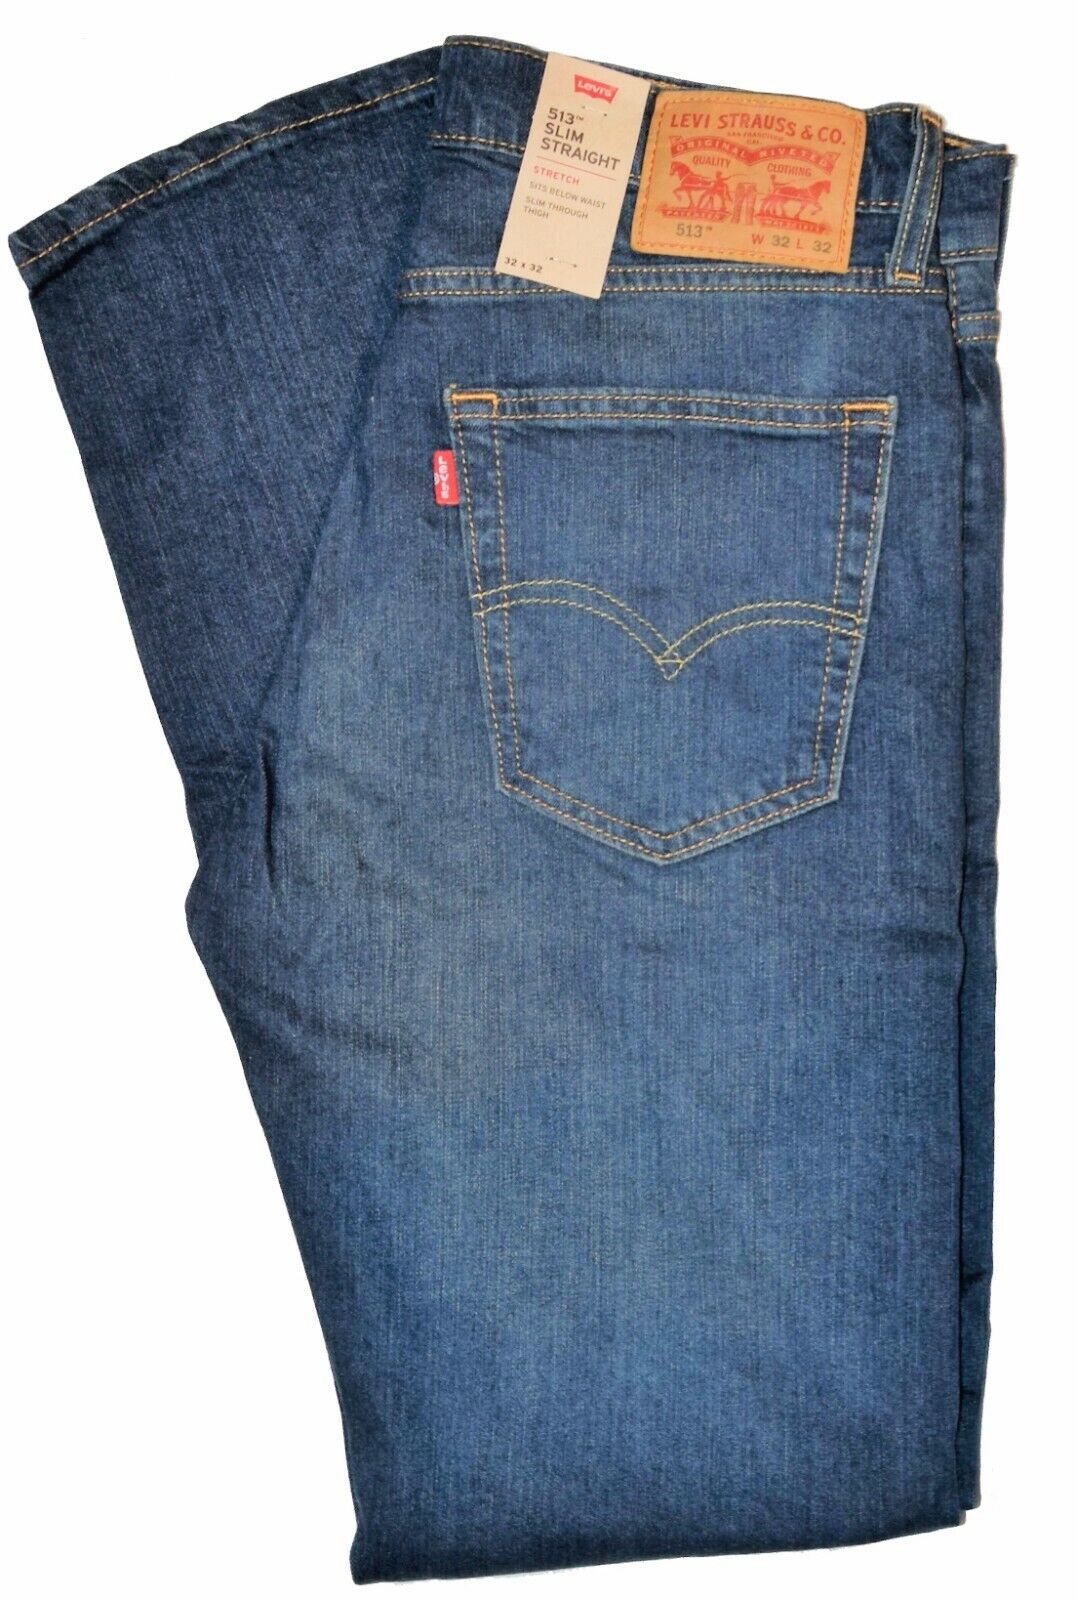 Genuine LEVIS 513 Men's Jeans Regular Straight Fit Dark Blue Faded SALE!!!  | eBay